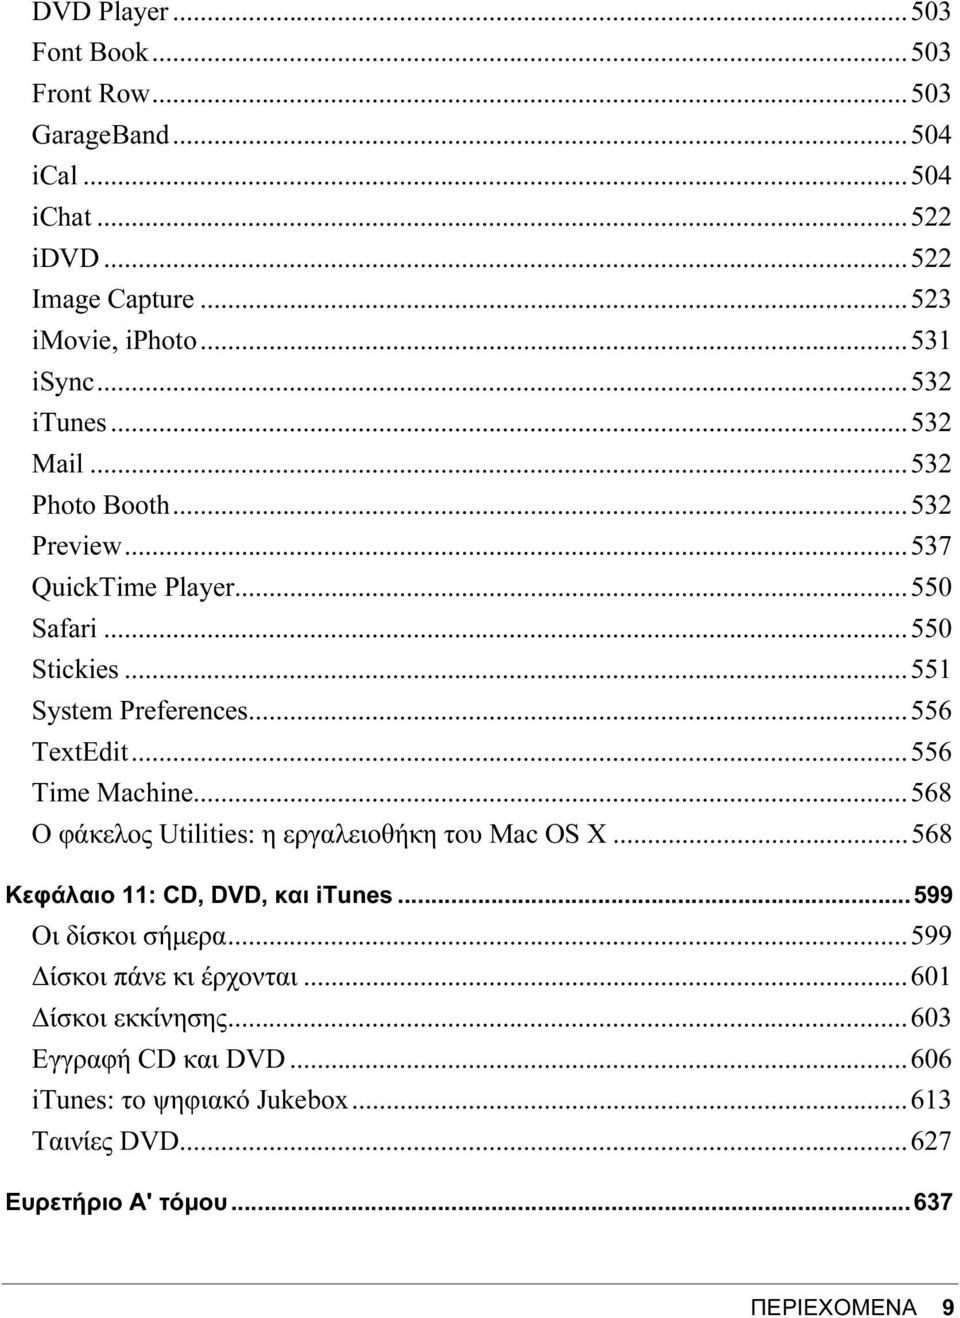 ..556 Time Machine...568 Ο φάκελος Utilities: η εργαλειοθήκη του Mac OS X...568 Κεφάλαιο 11: CD, DVD, και itunes...599 Οι δίσκοι σήμερα.